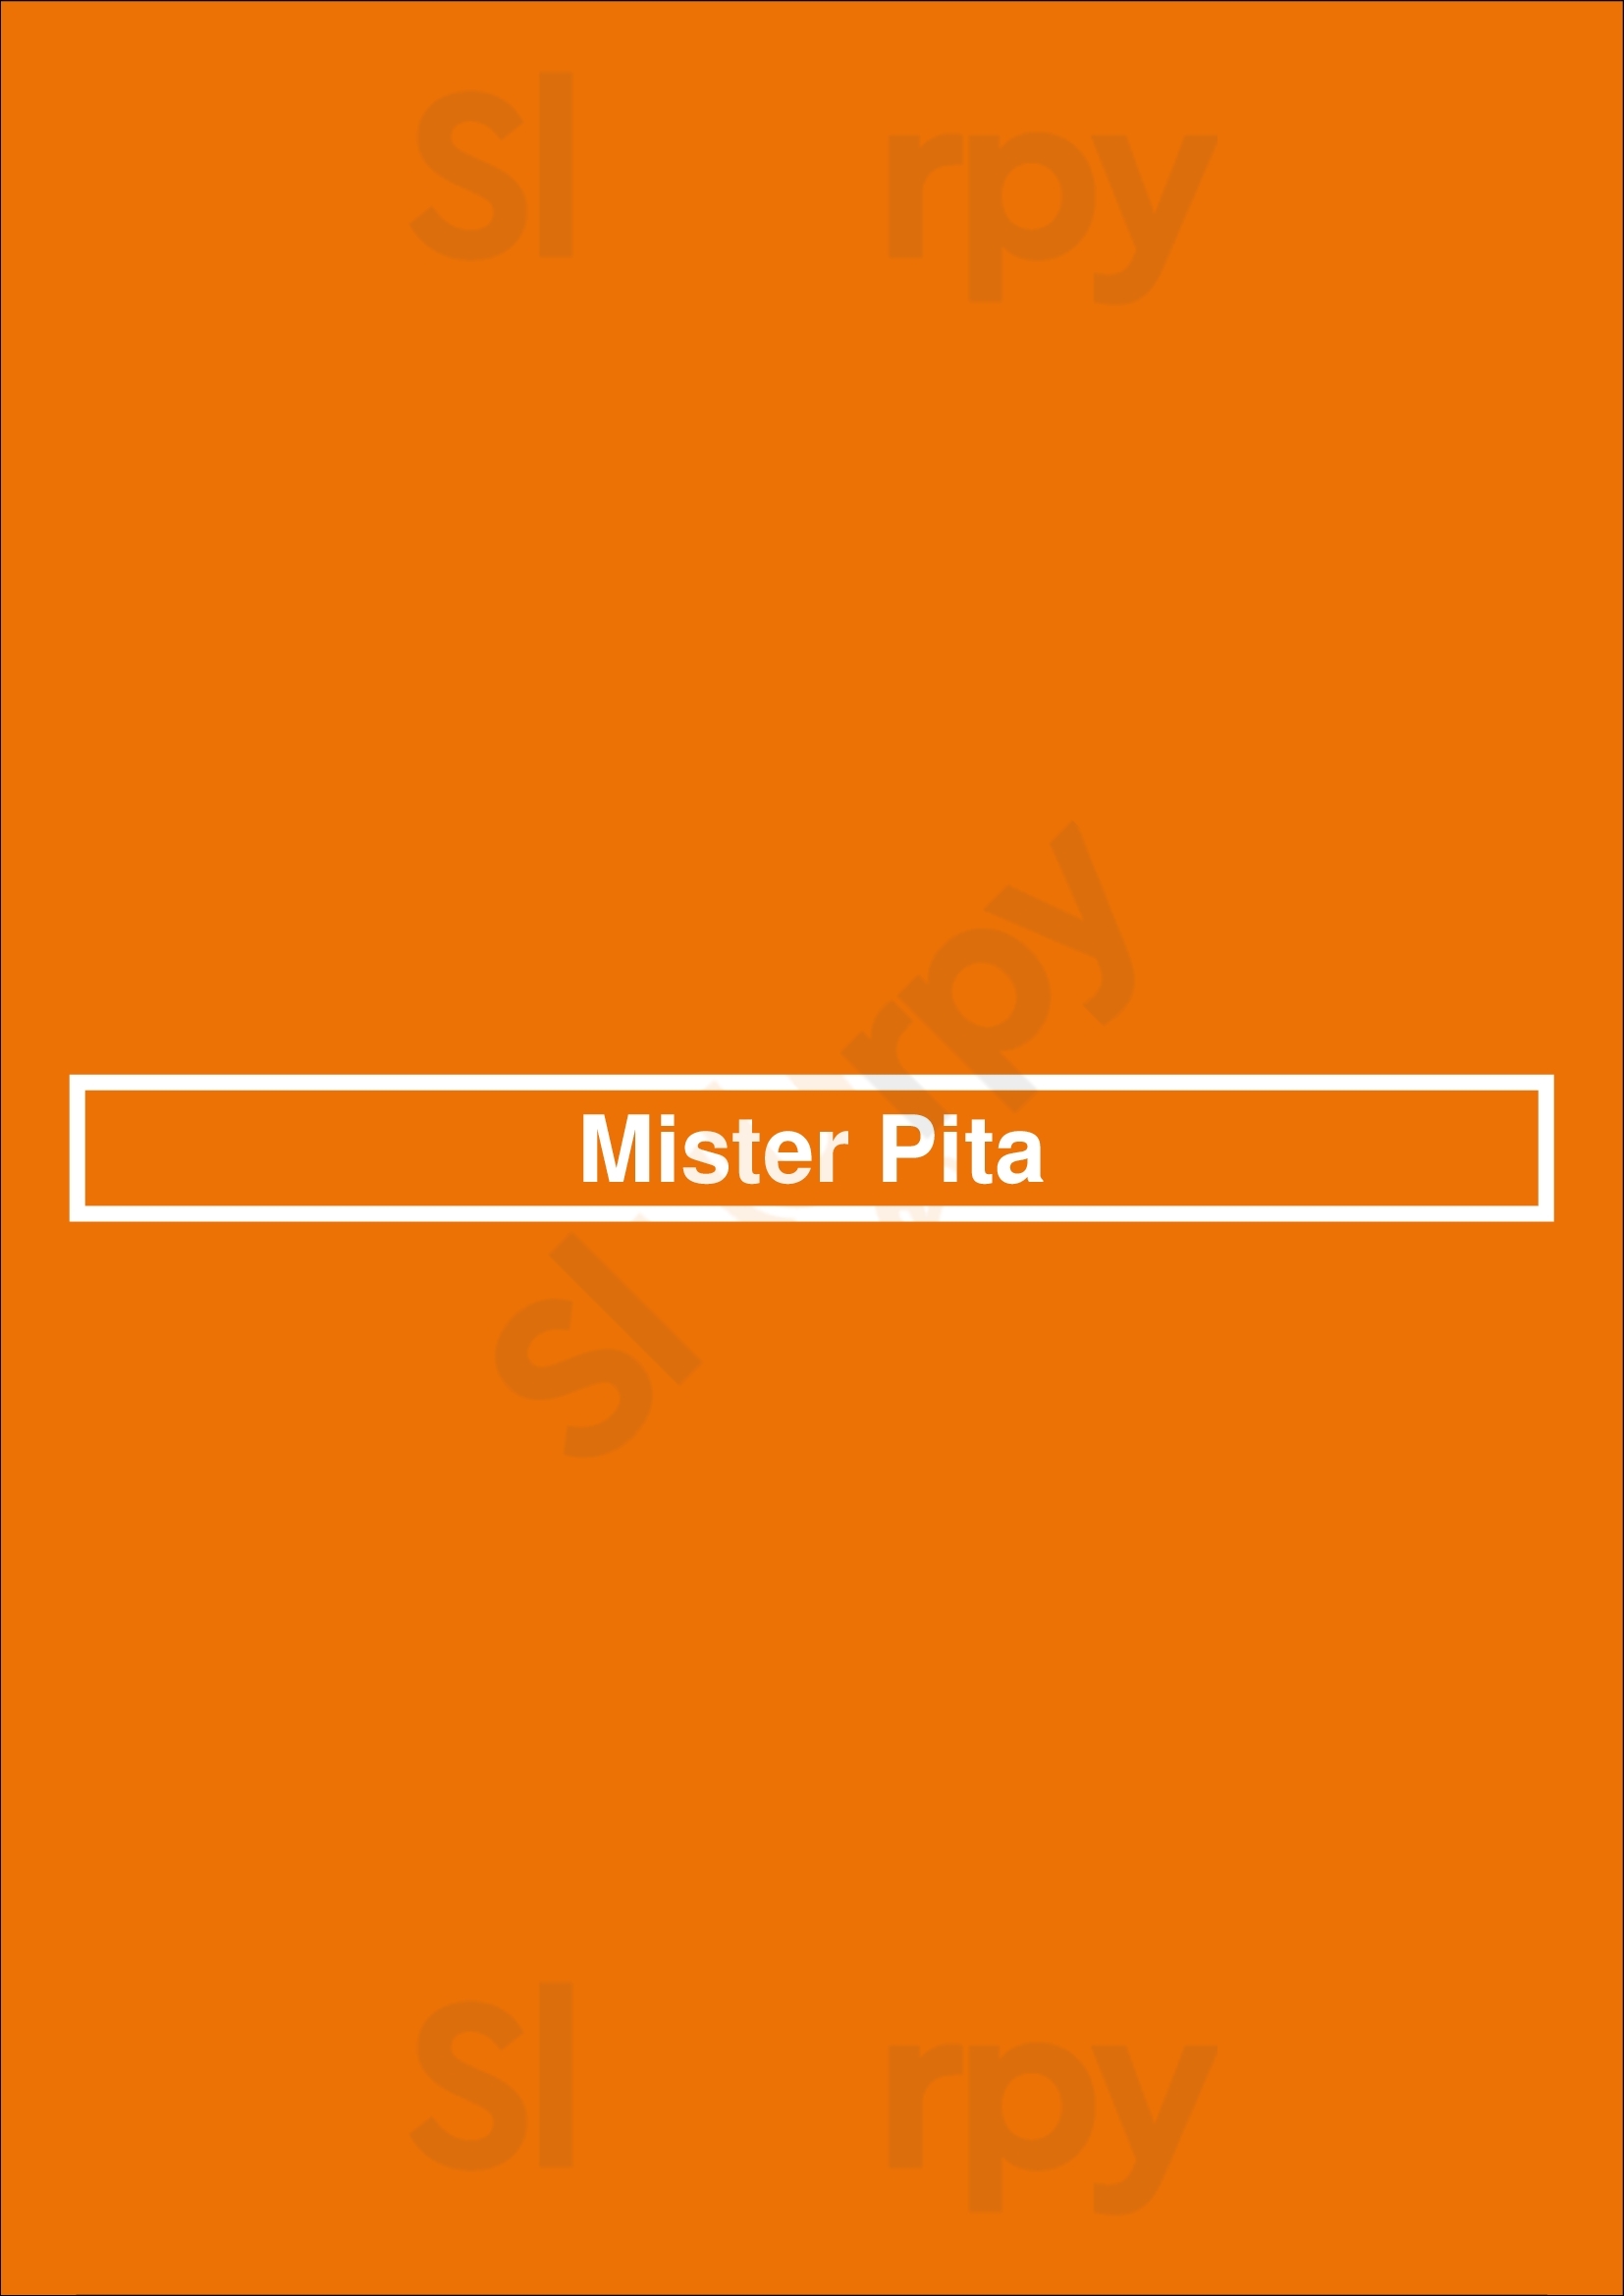 Mister Pita Rotterdam Menu - 1